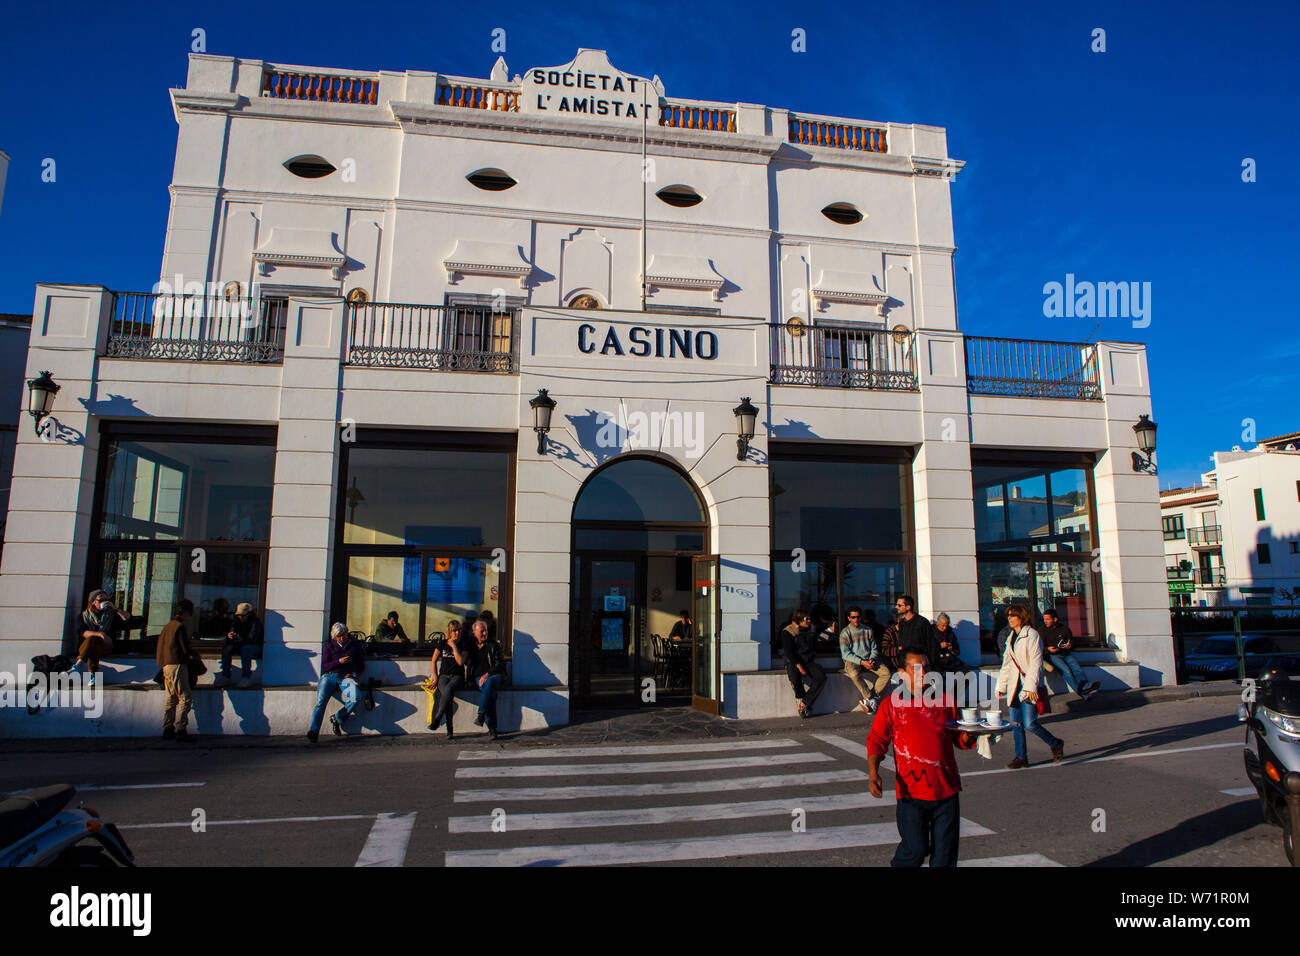 Casino l'Amistat, Cadaques, Catalonia Stock Photo